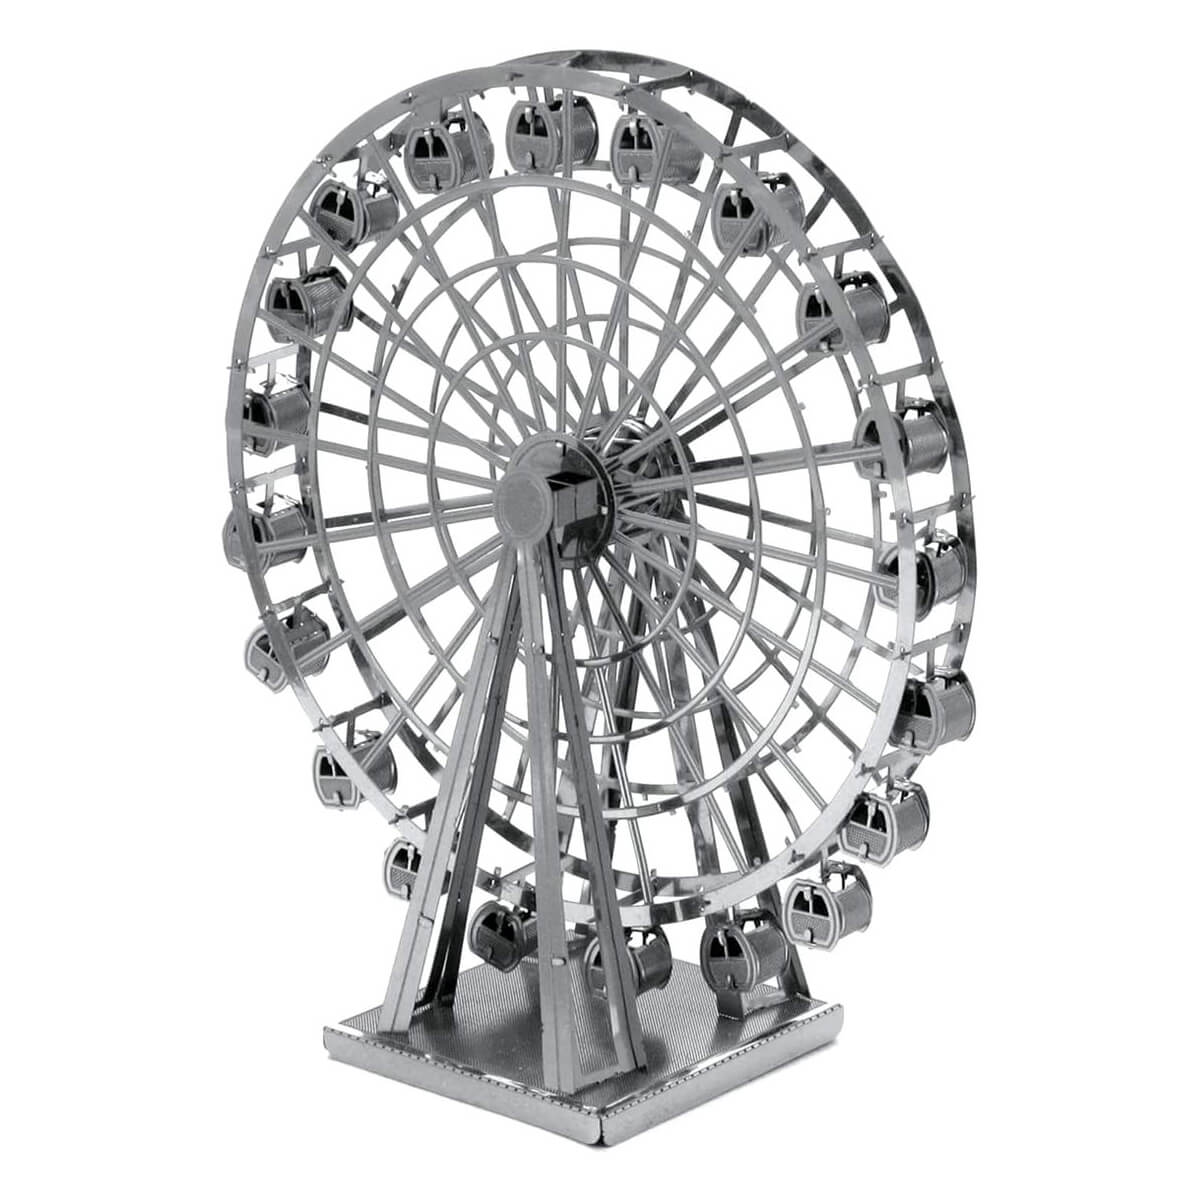 Metal Earth Ferris Wheel Metal Model Kit - 2 Sheets